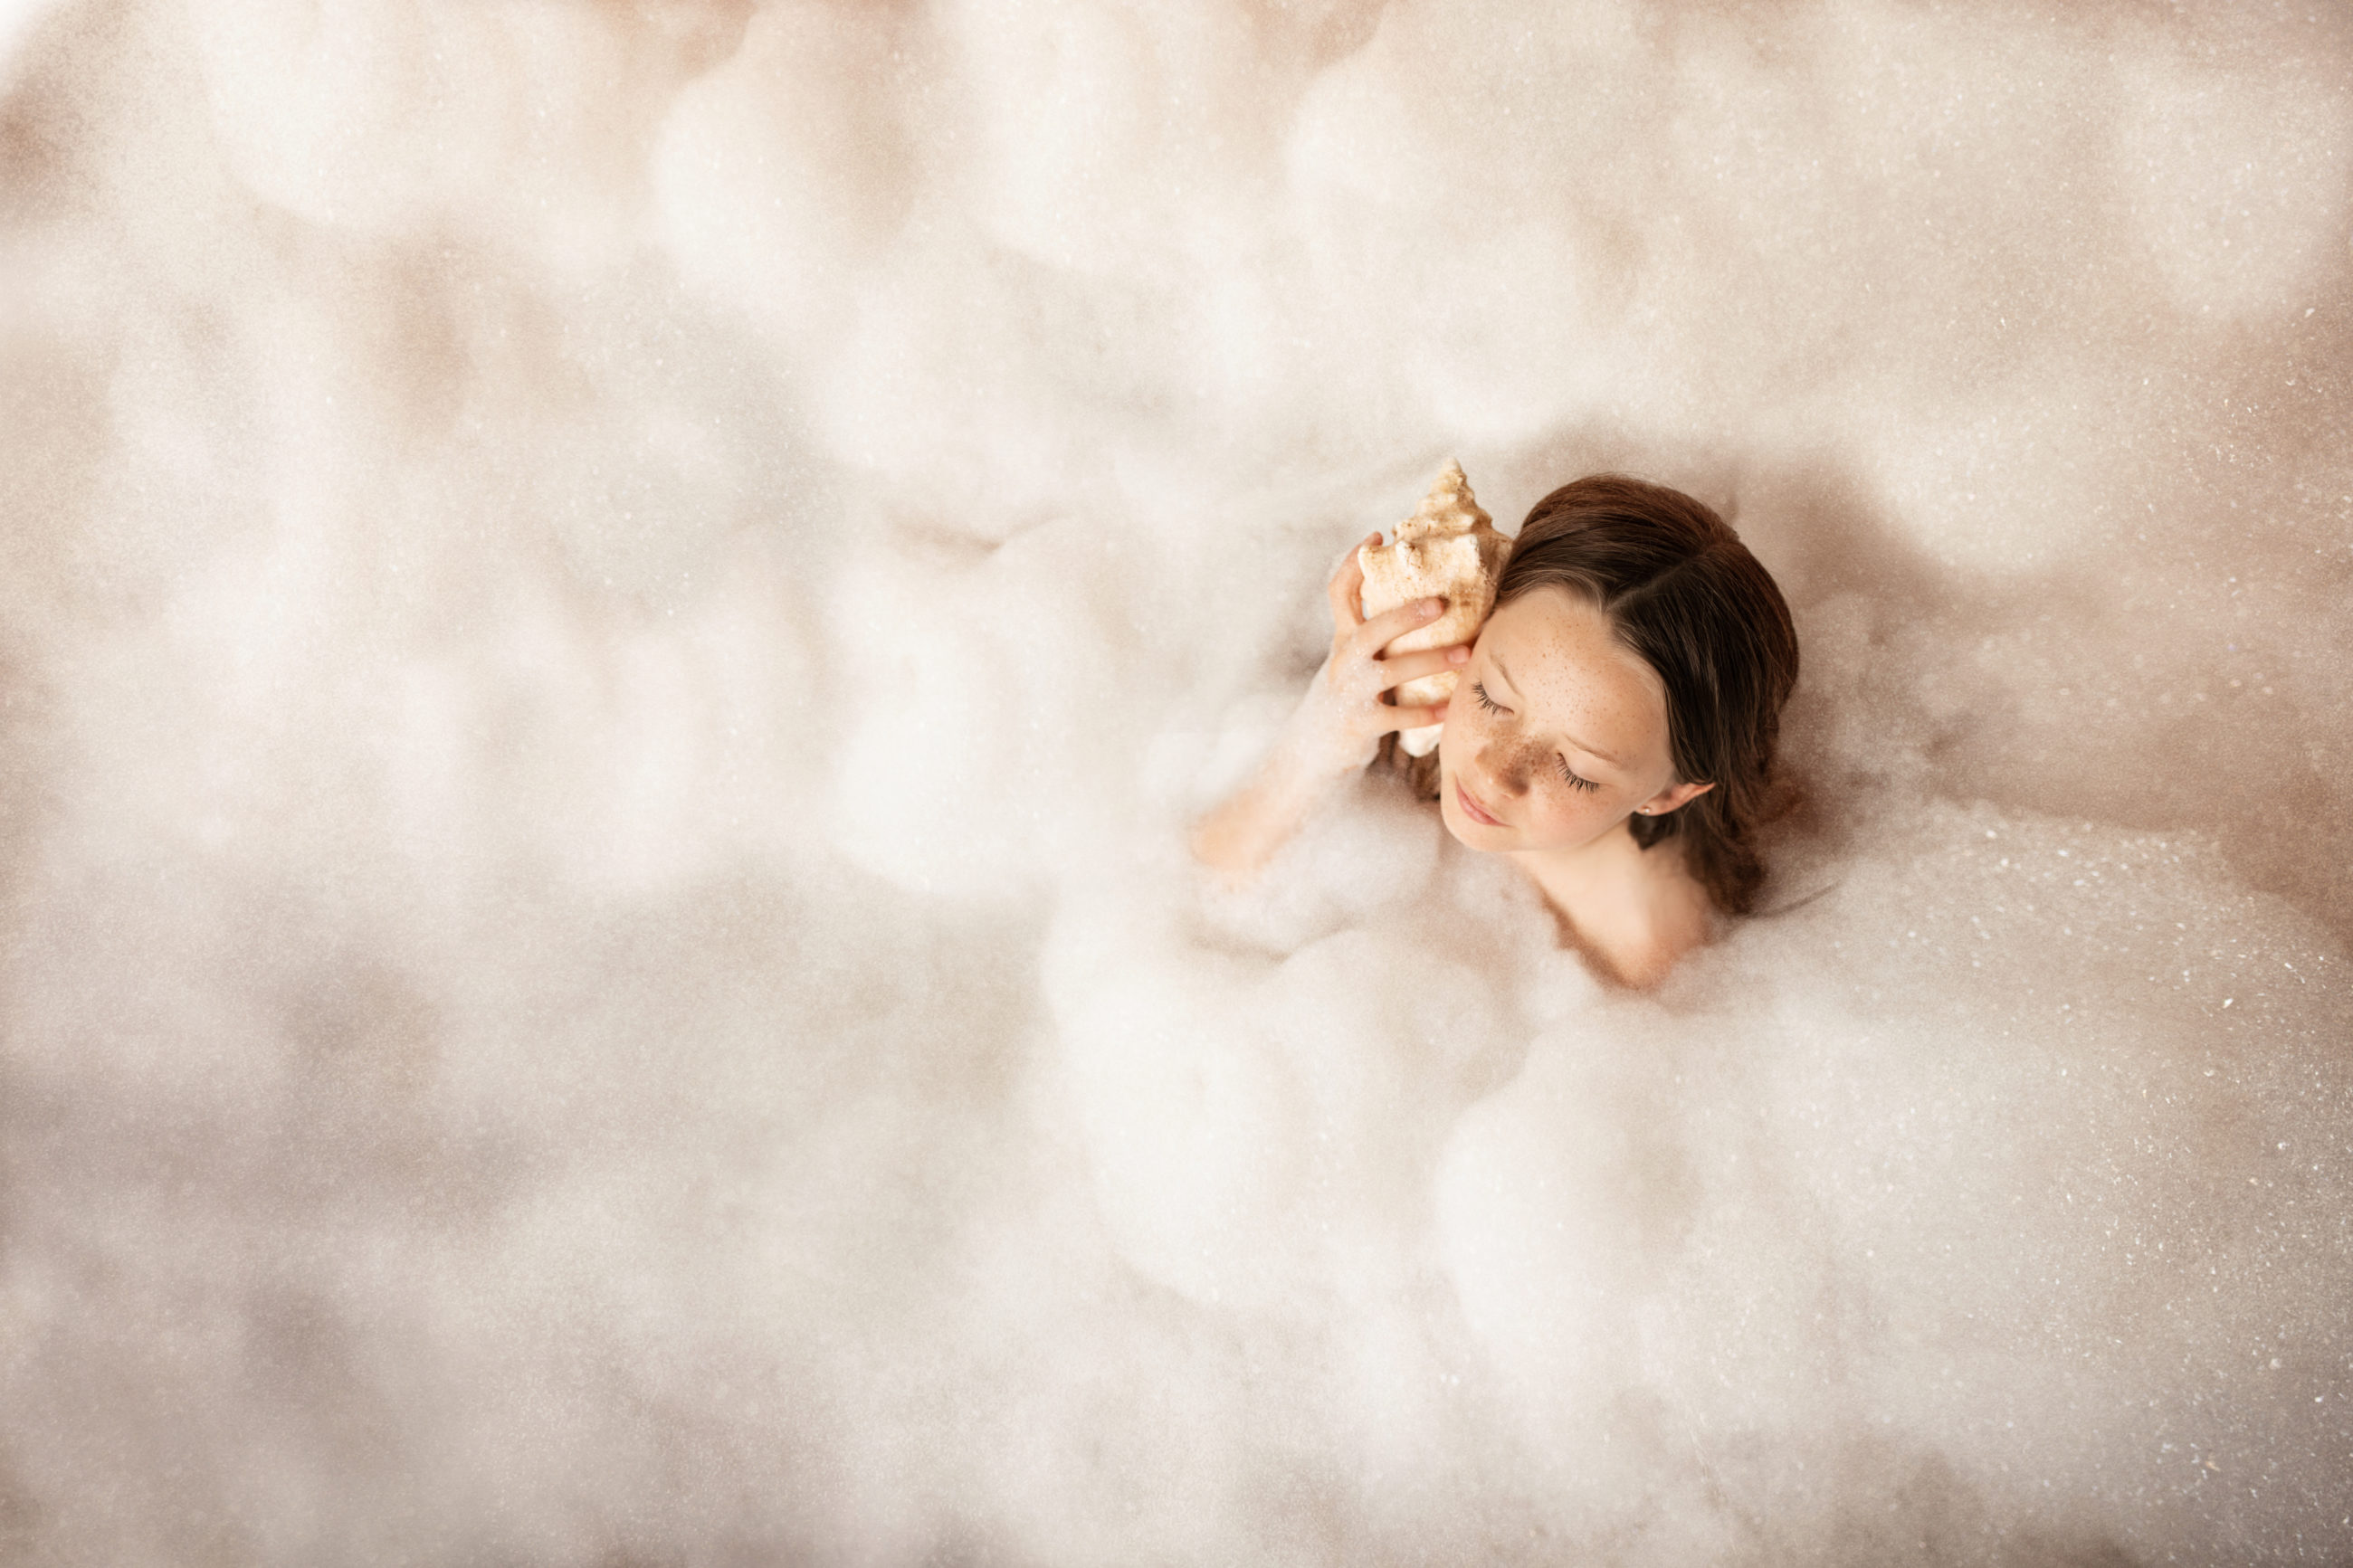 little girl in the bubble bath - boulder photographer